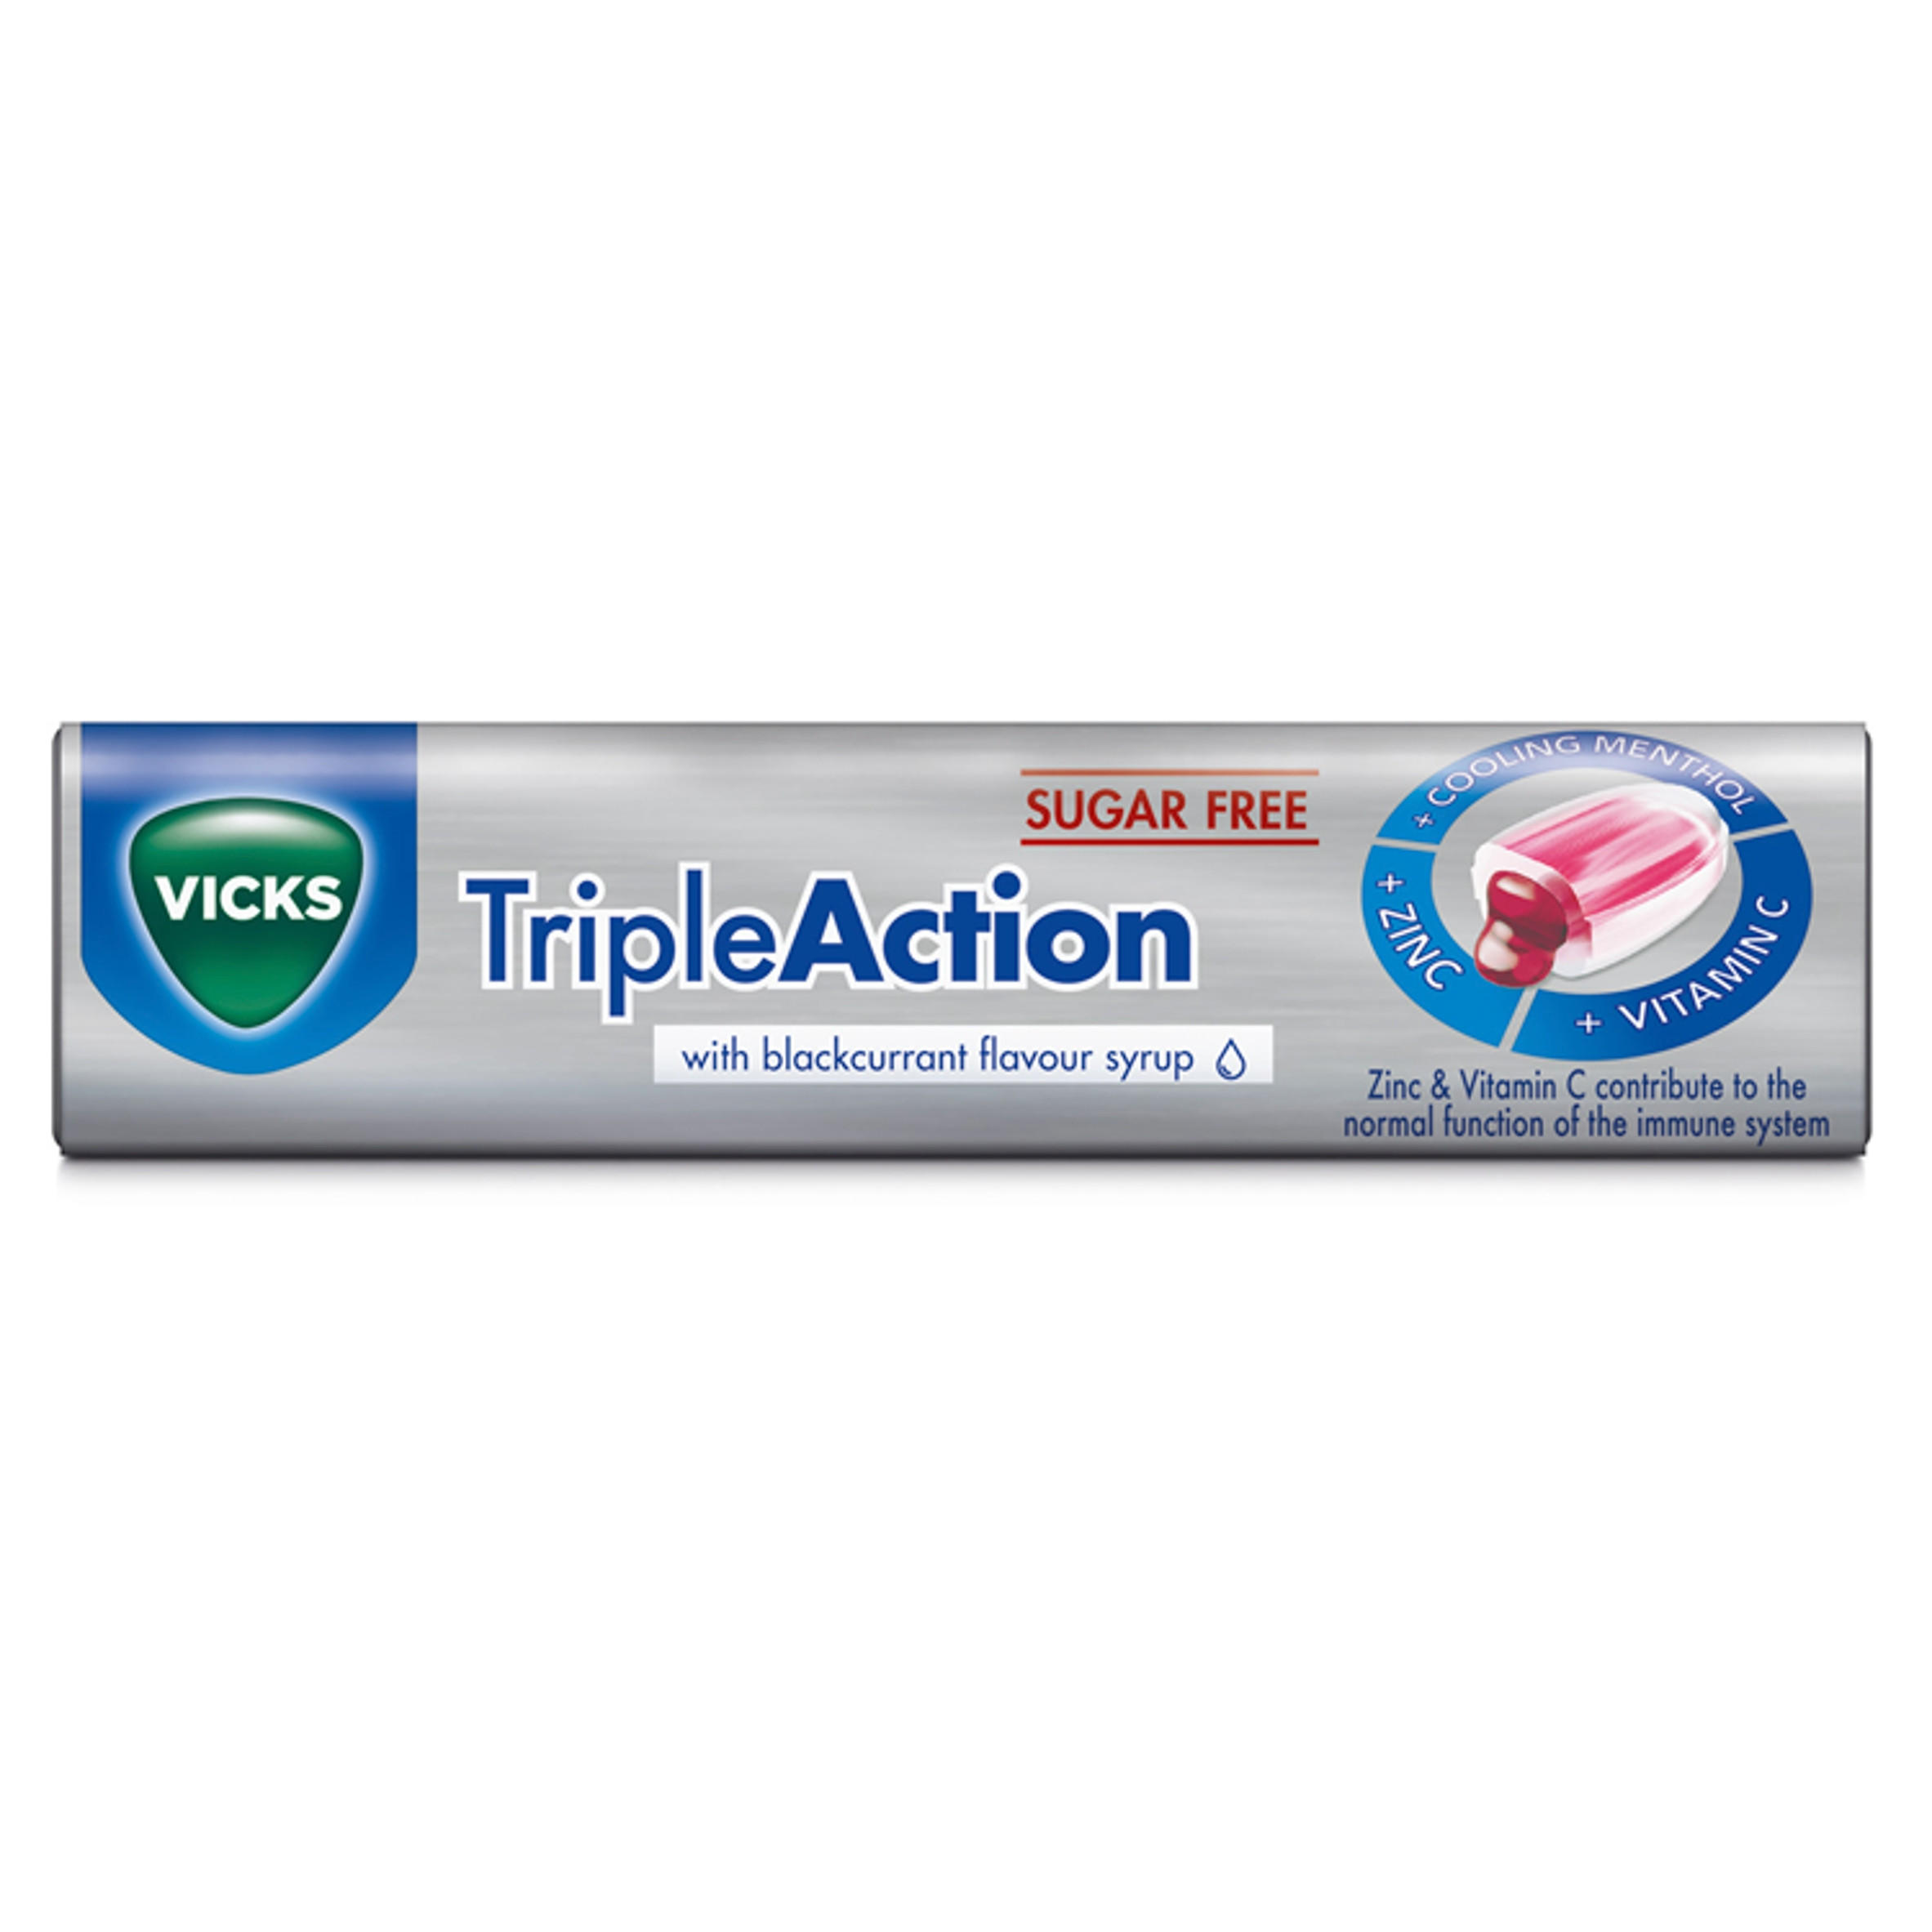 Vicks Triple Action Sugar Free with Vitamin C and Zinc 42g